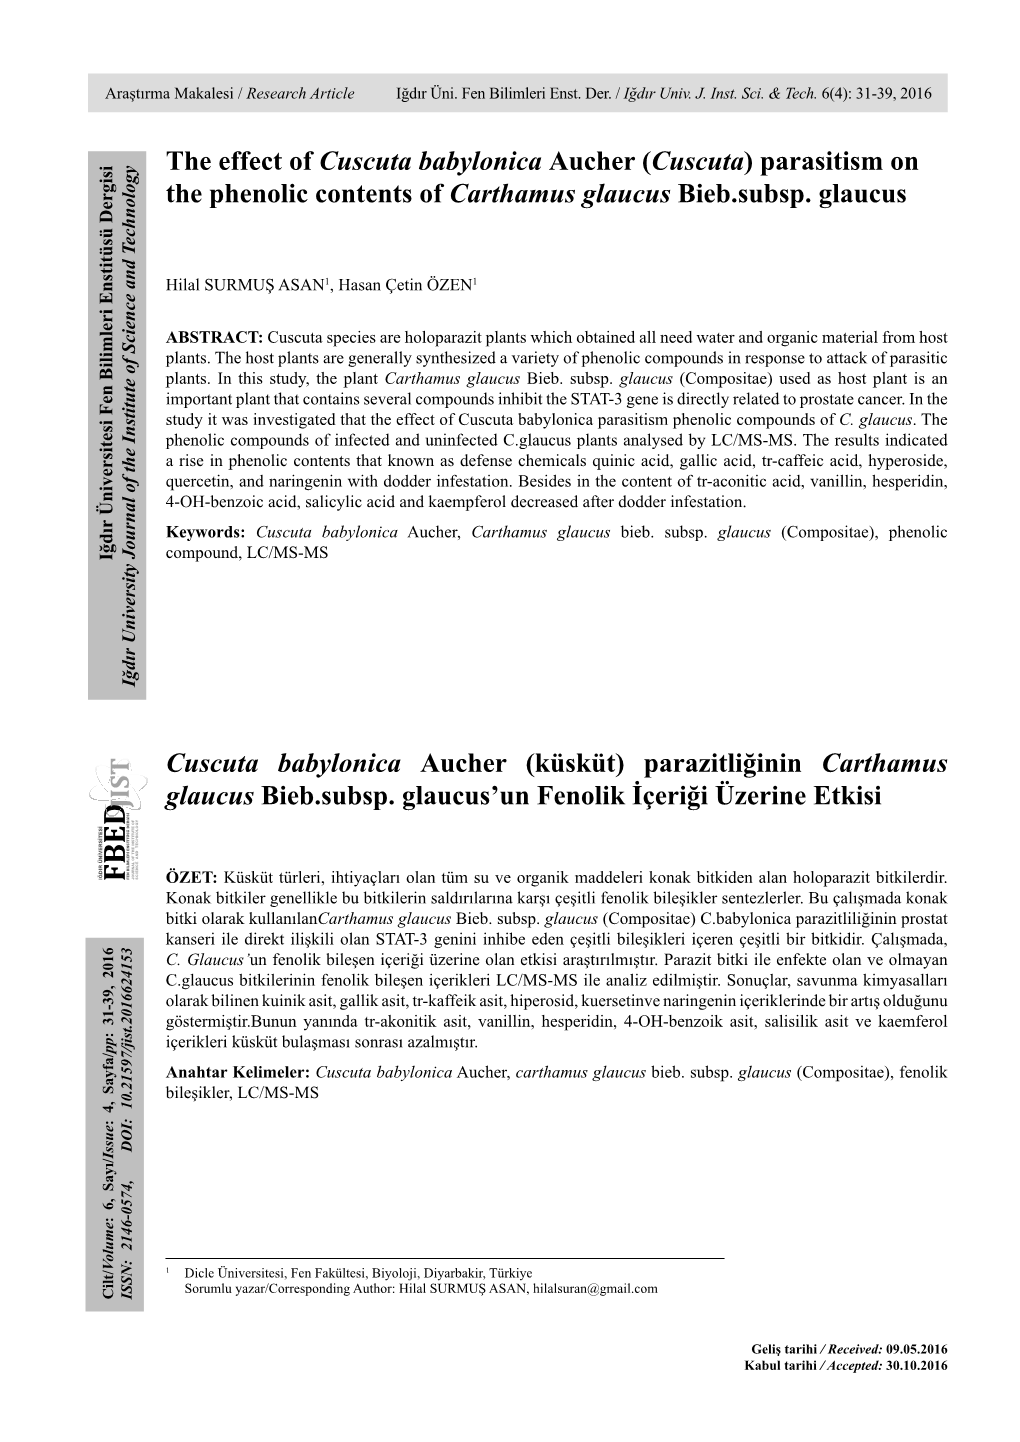 (Cuscuta) Parasitism on the Phenolic Contents of Carthamus Glaucus